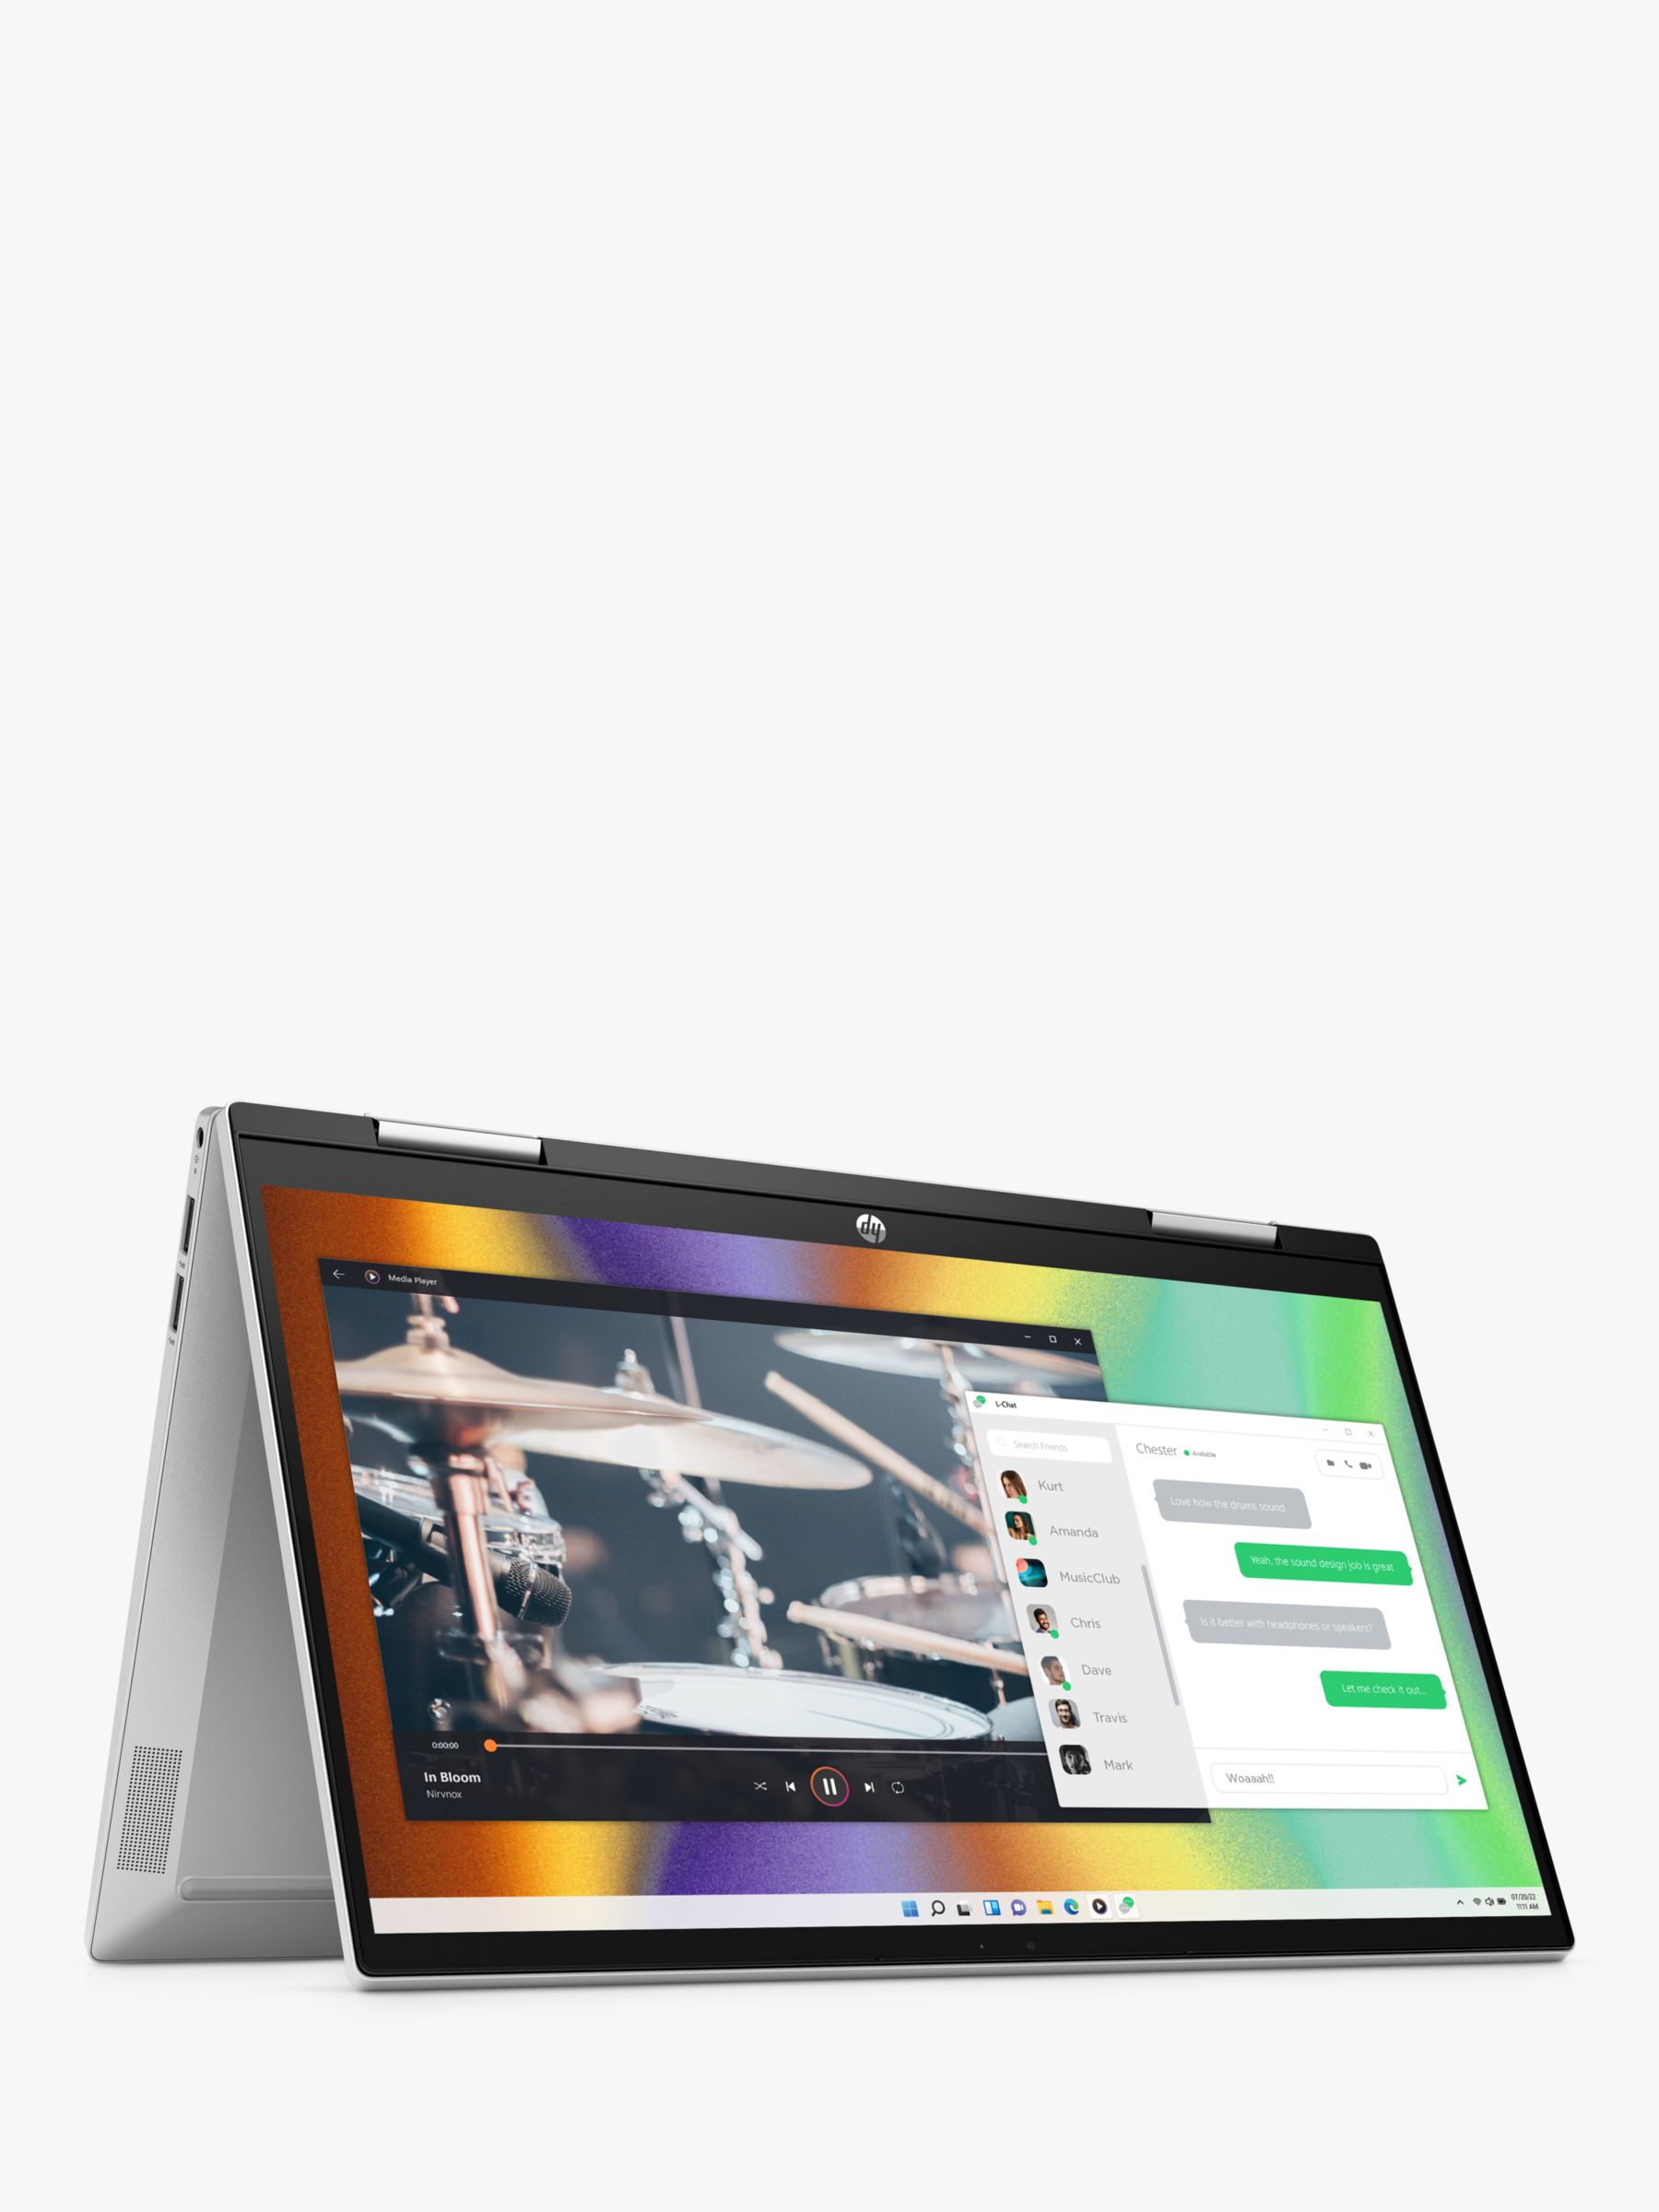 Sprog fortov mager HP Pavilion x360 Convertible Laptop, Intel Core i3 Processor, 8GB RAM,  128GB SSD, 14" Full HD Touchscreen, Silver